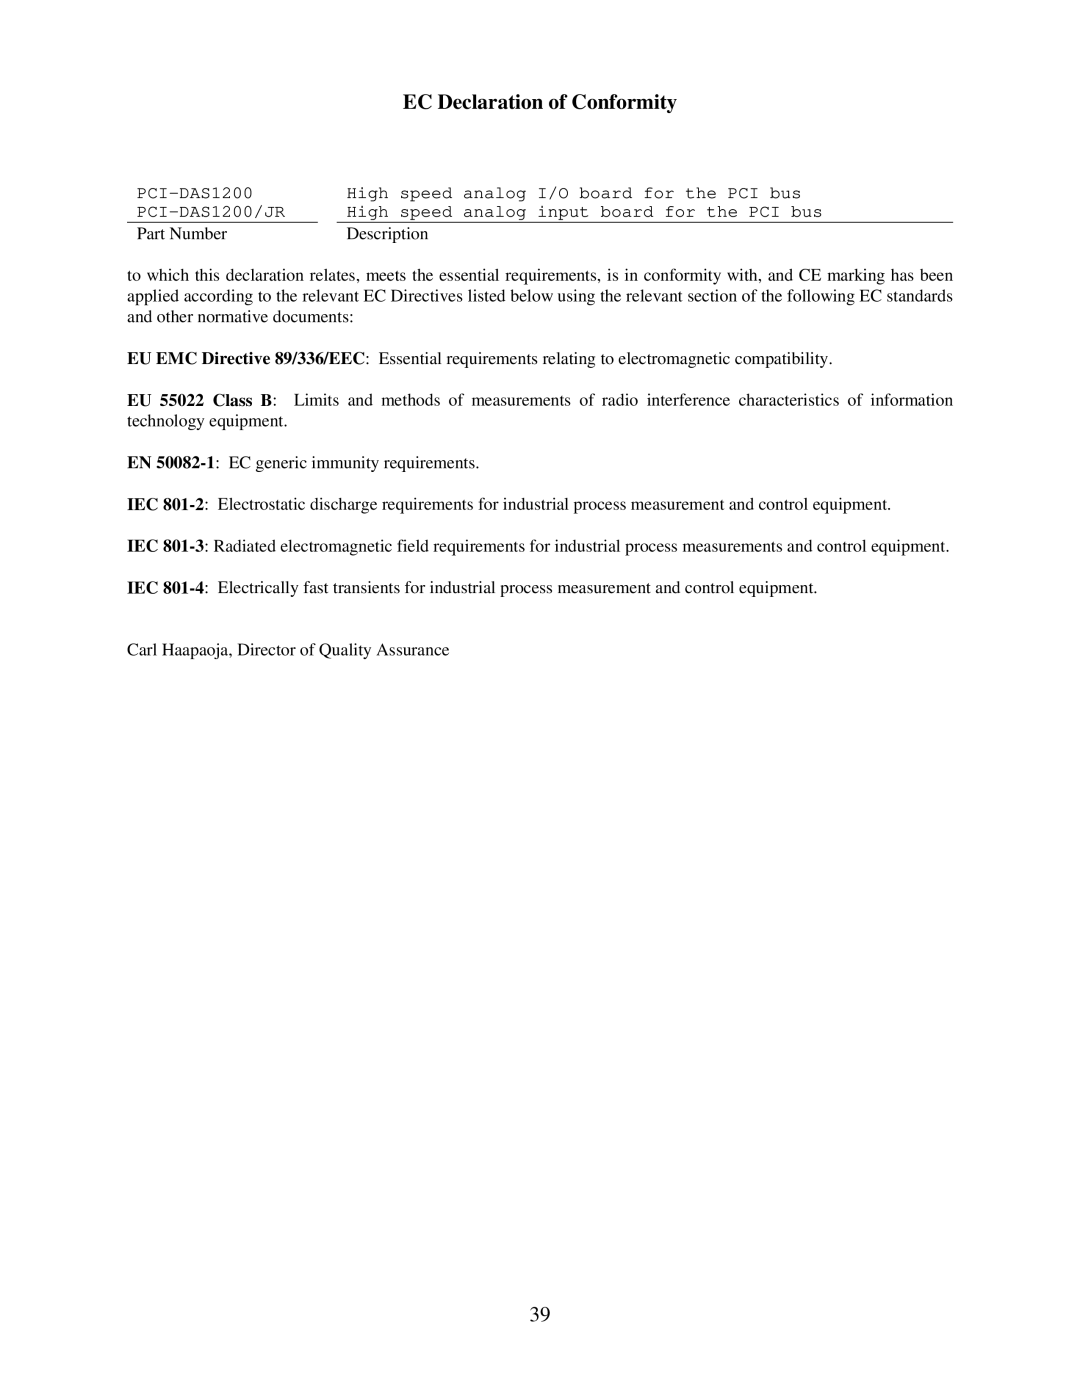 Omega Engineering PCI-DAS1200 manual EC Declaration of Conformity 